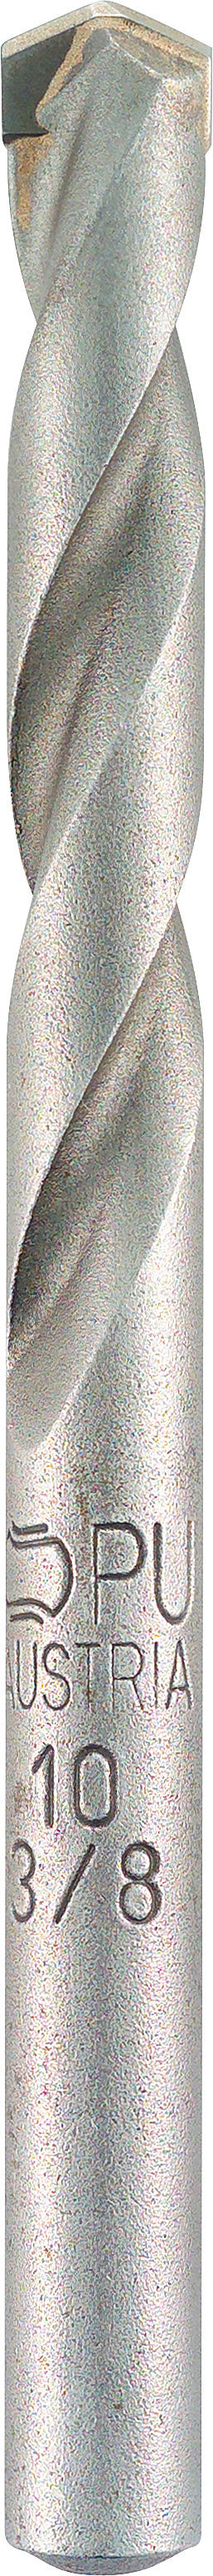 alpen-masonry-drill-bit-long-life-7.0-x-150mm-alp71807-1